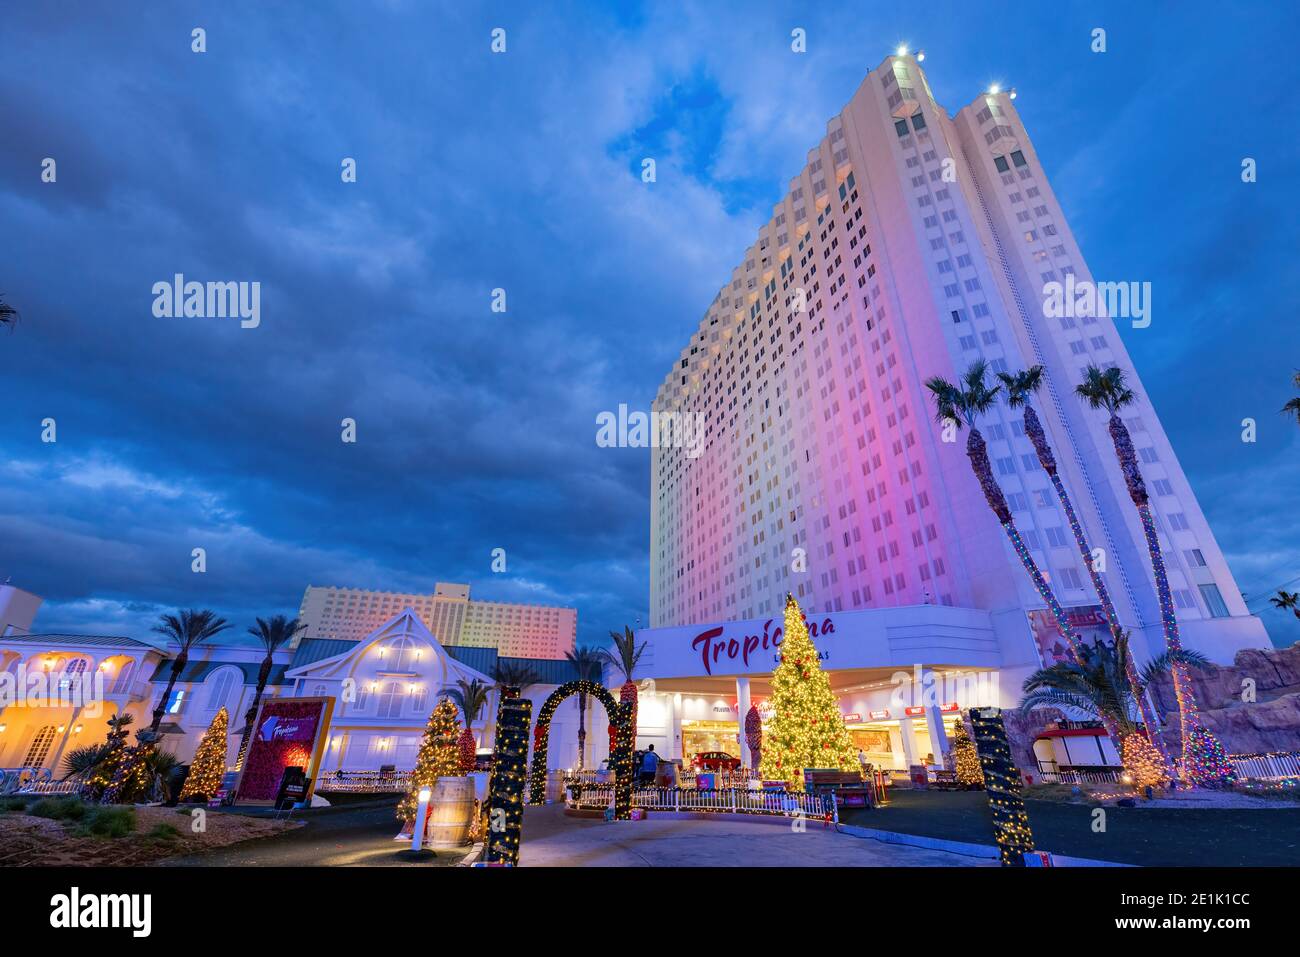 Las Vegas, DEC 28, 2020 - Christmas decoration of the Tropicana Las Vegas Stock Photo